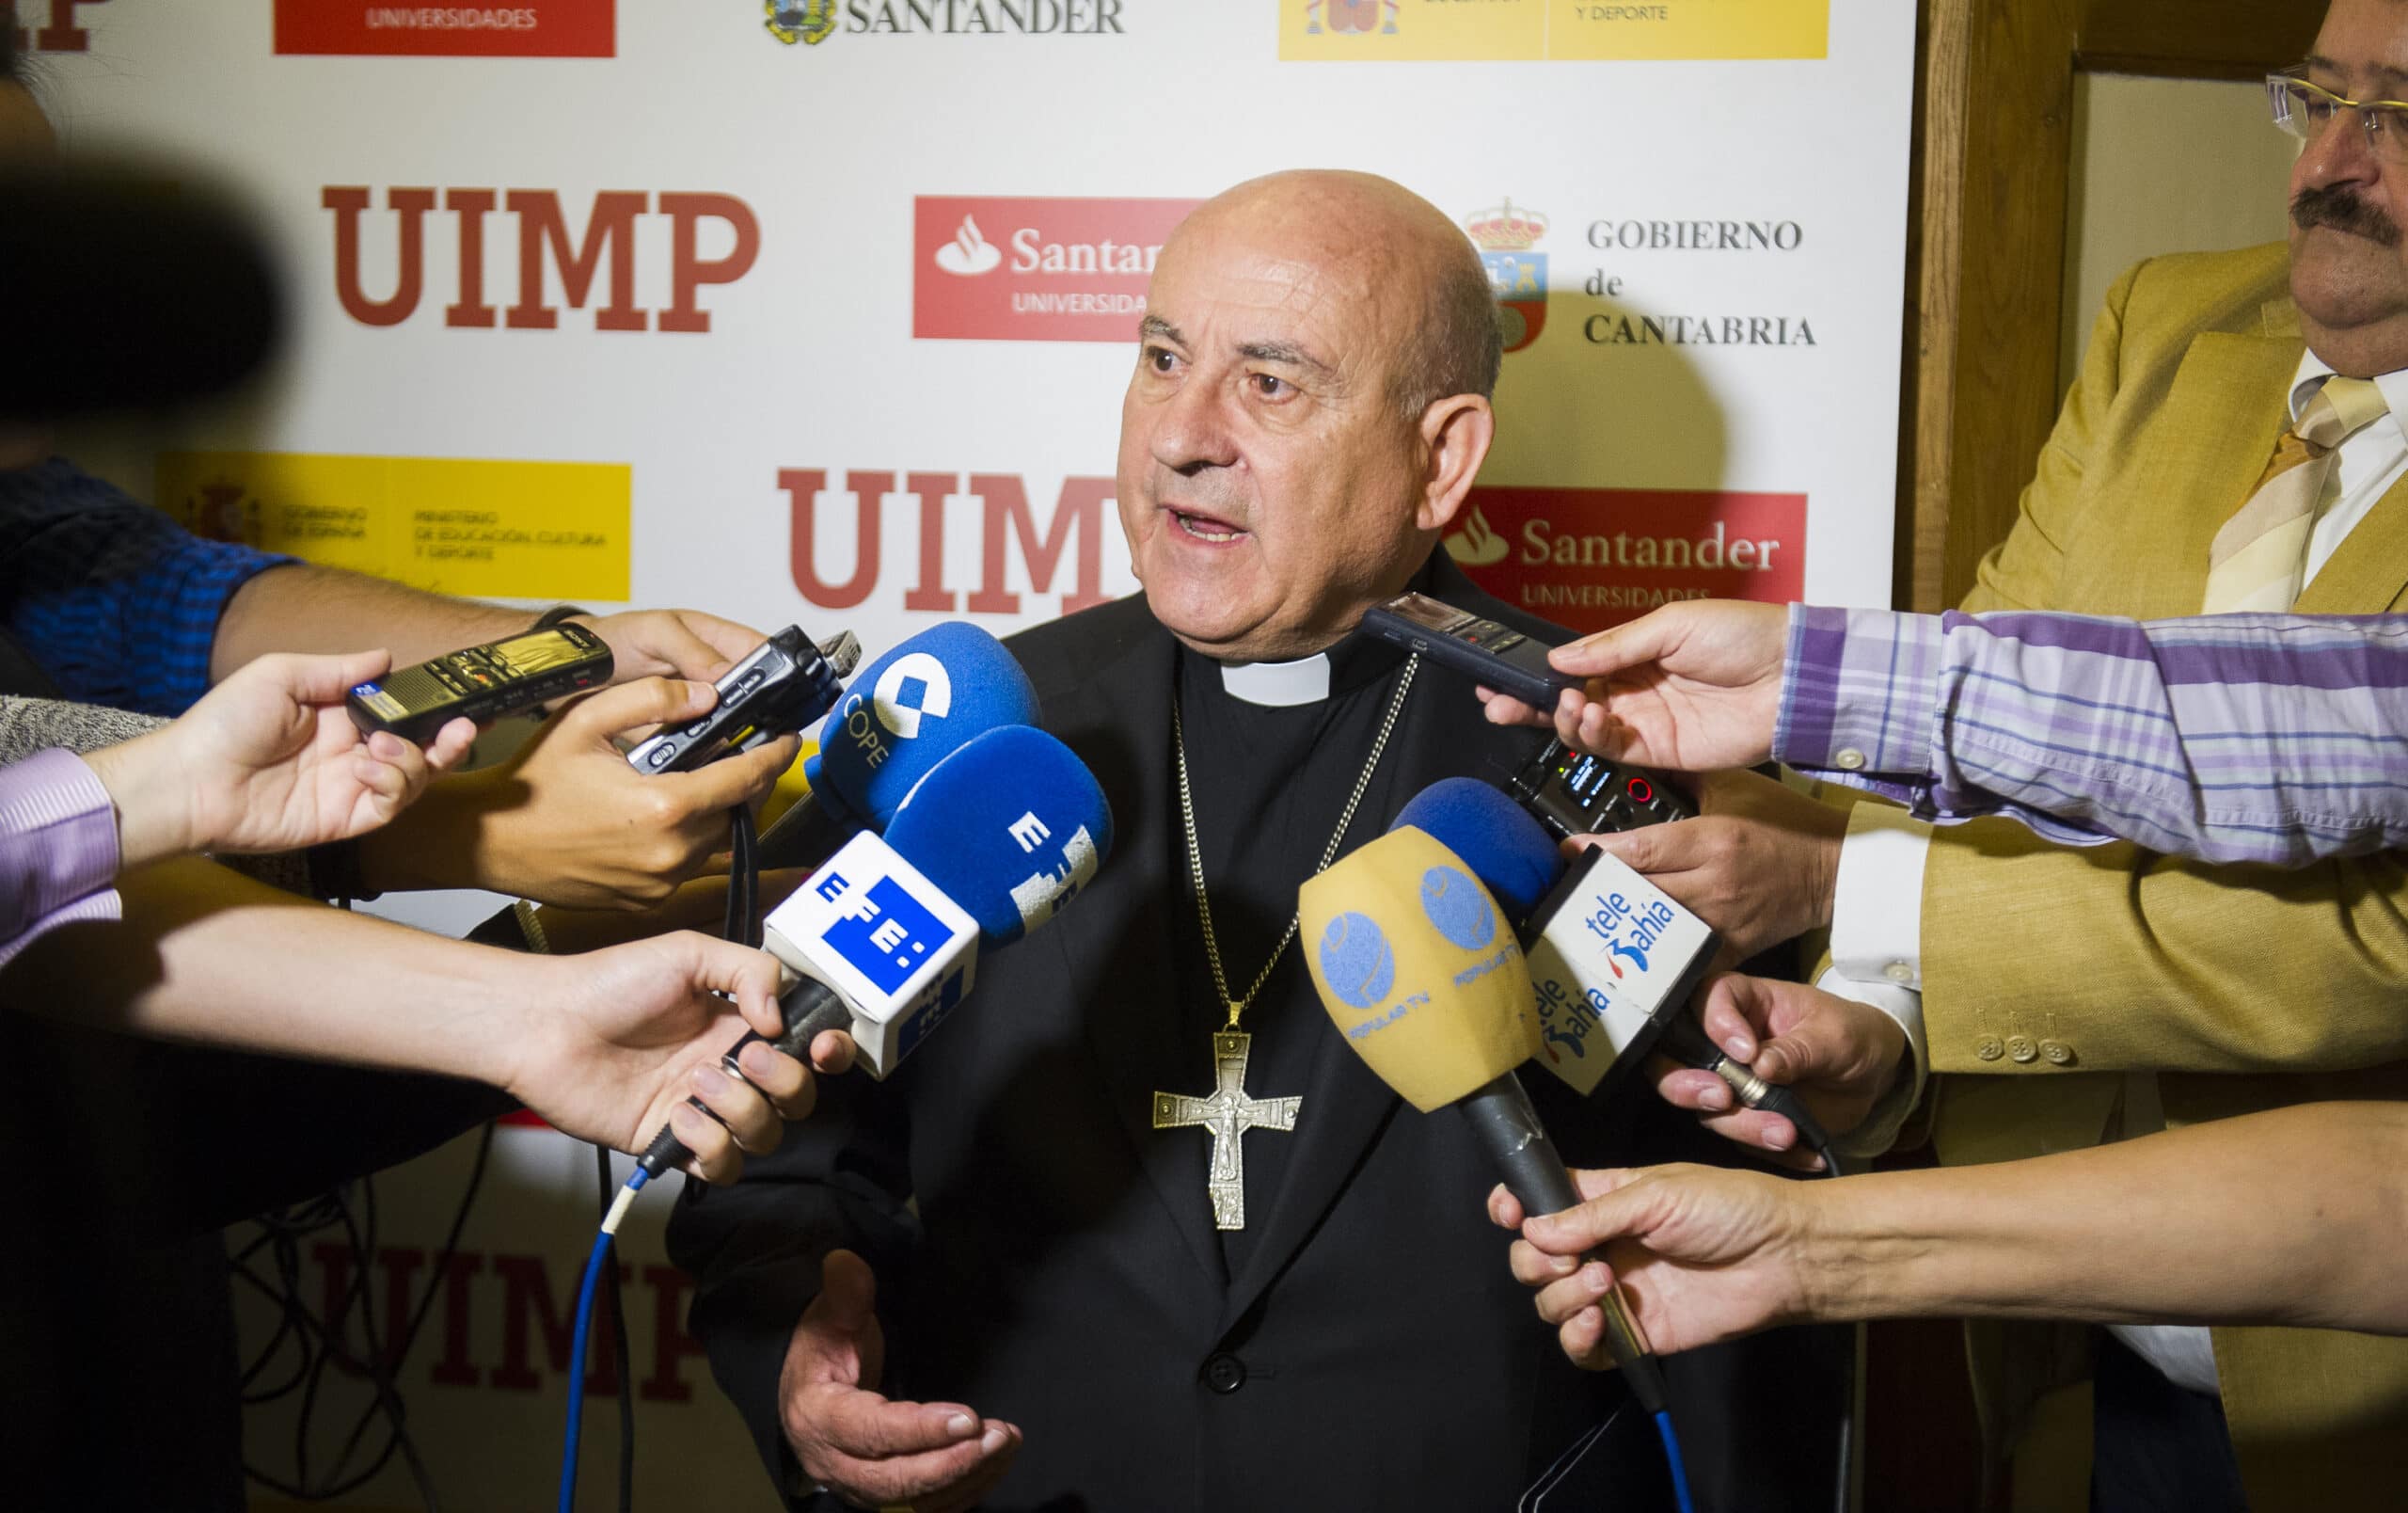 Vicente Jiménez Zamora, arzobispo de Zaragoza, imputado por ... - Infovaticana